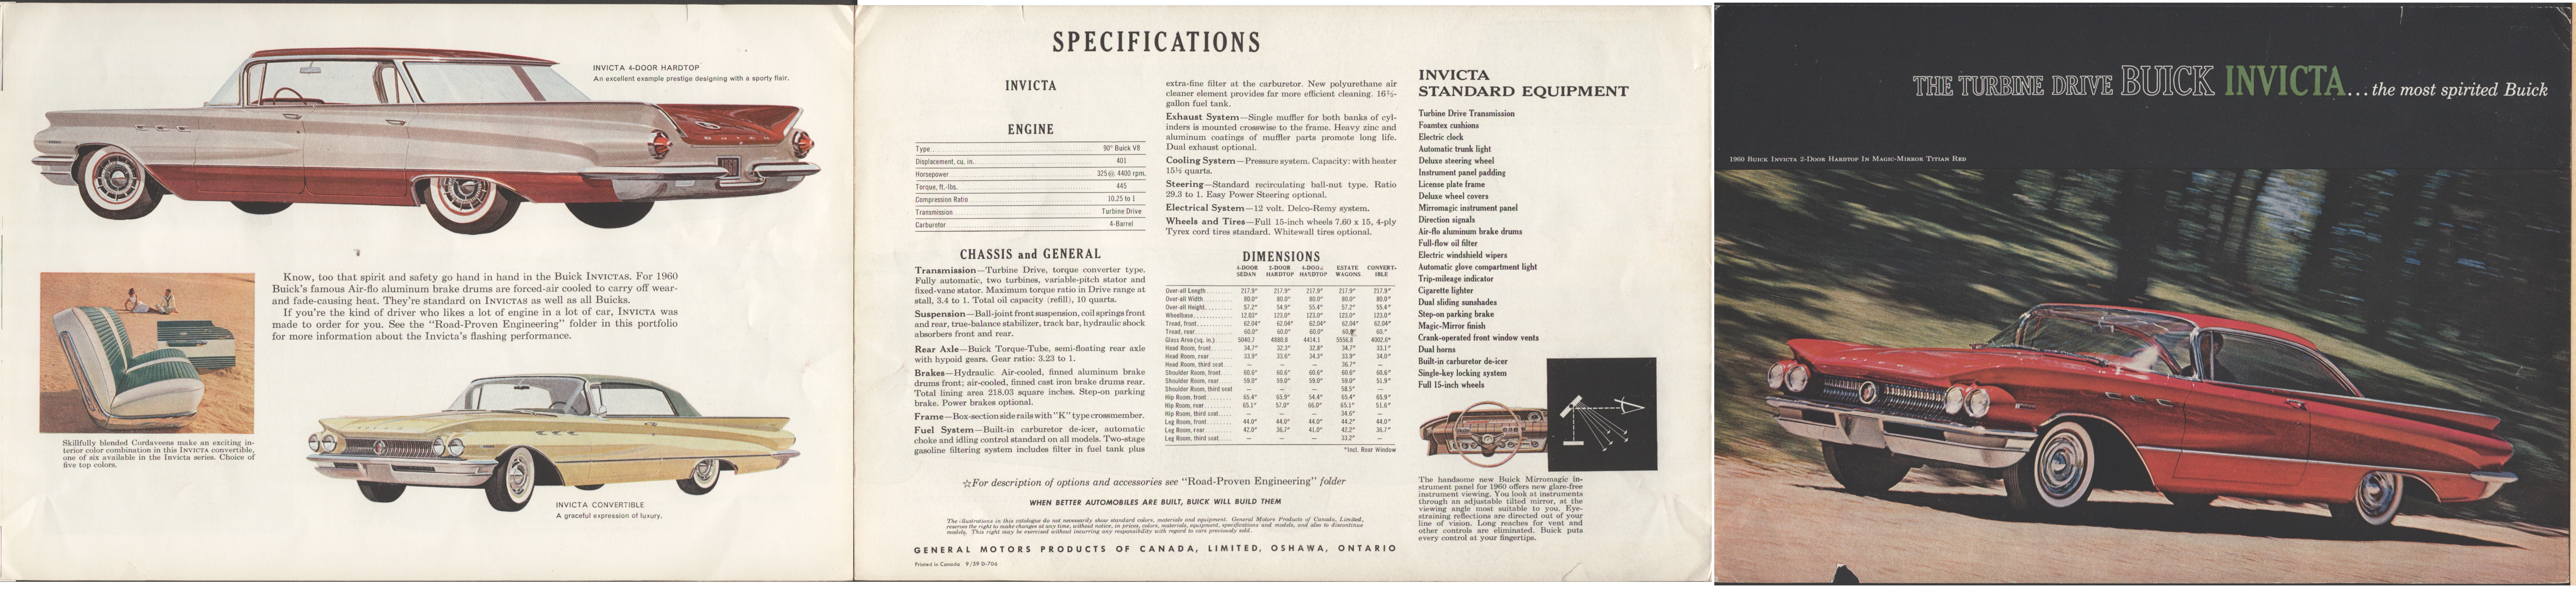 1960 Buick Invicta Foldout (Cdn) 05-06-01